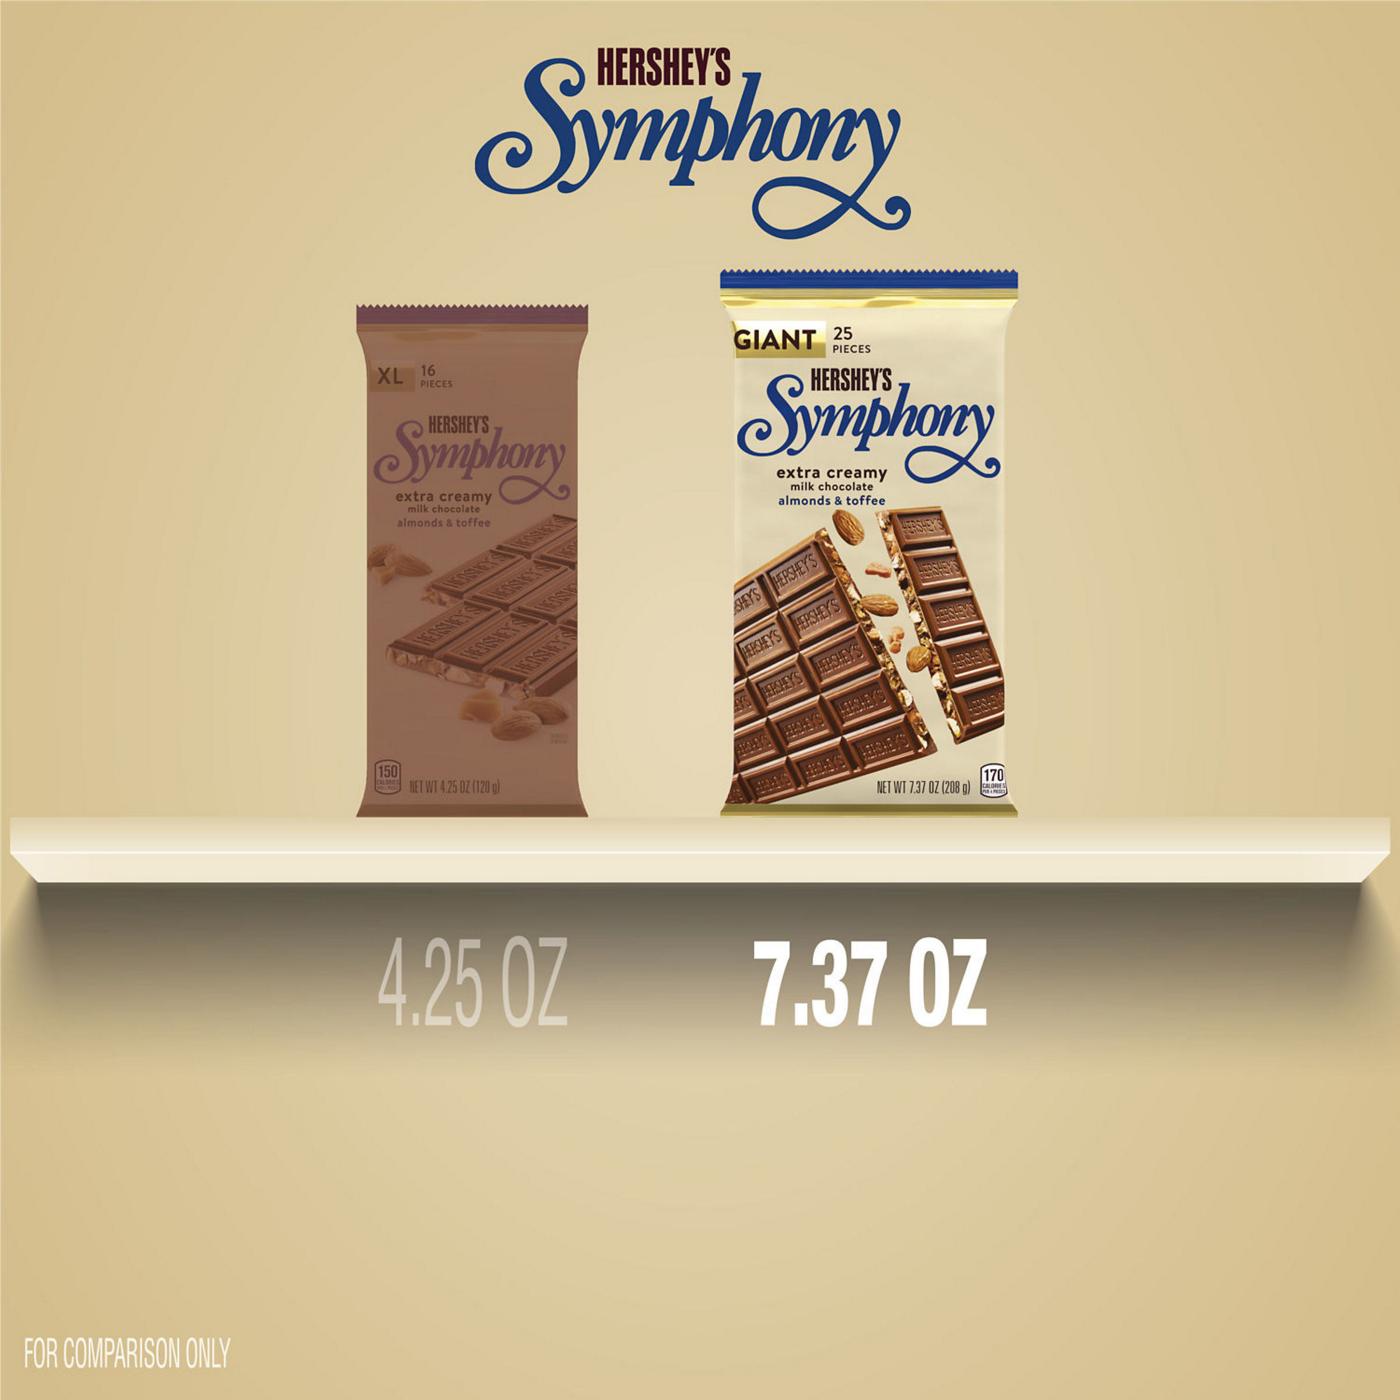 Hershey's Symphony Almonds & Toffee Giant Milk Chocolate Bar; image 4 of 7